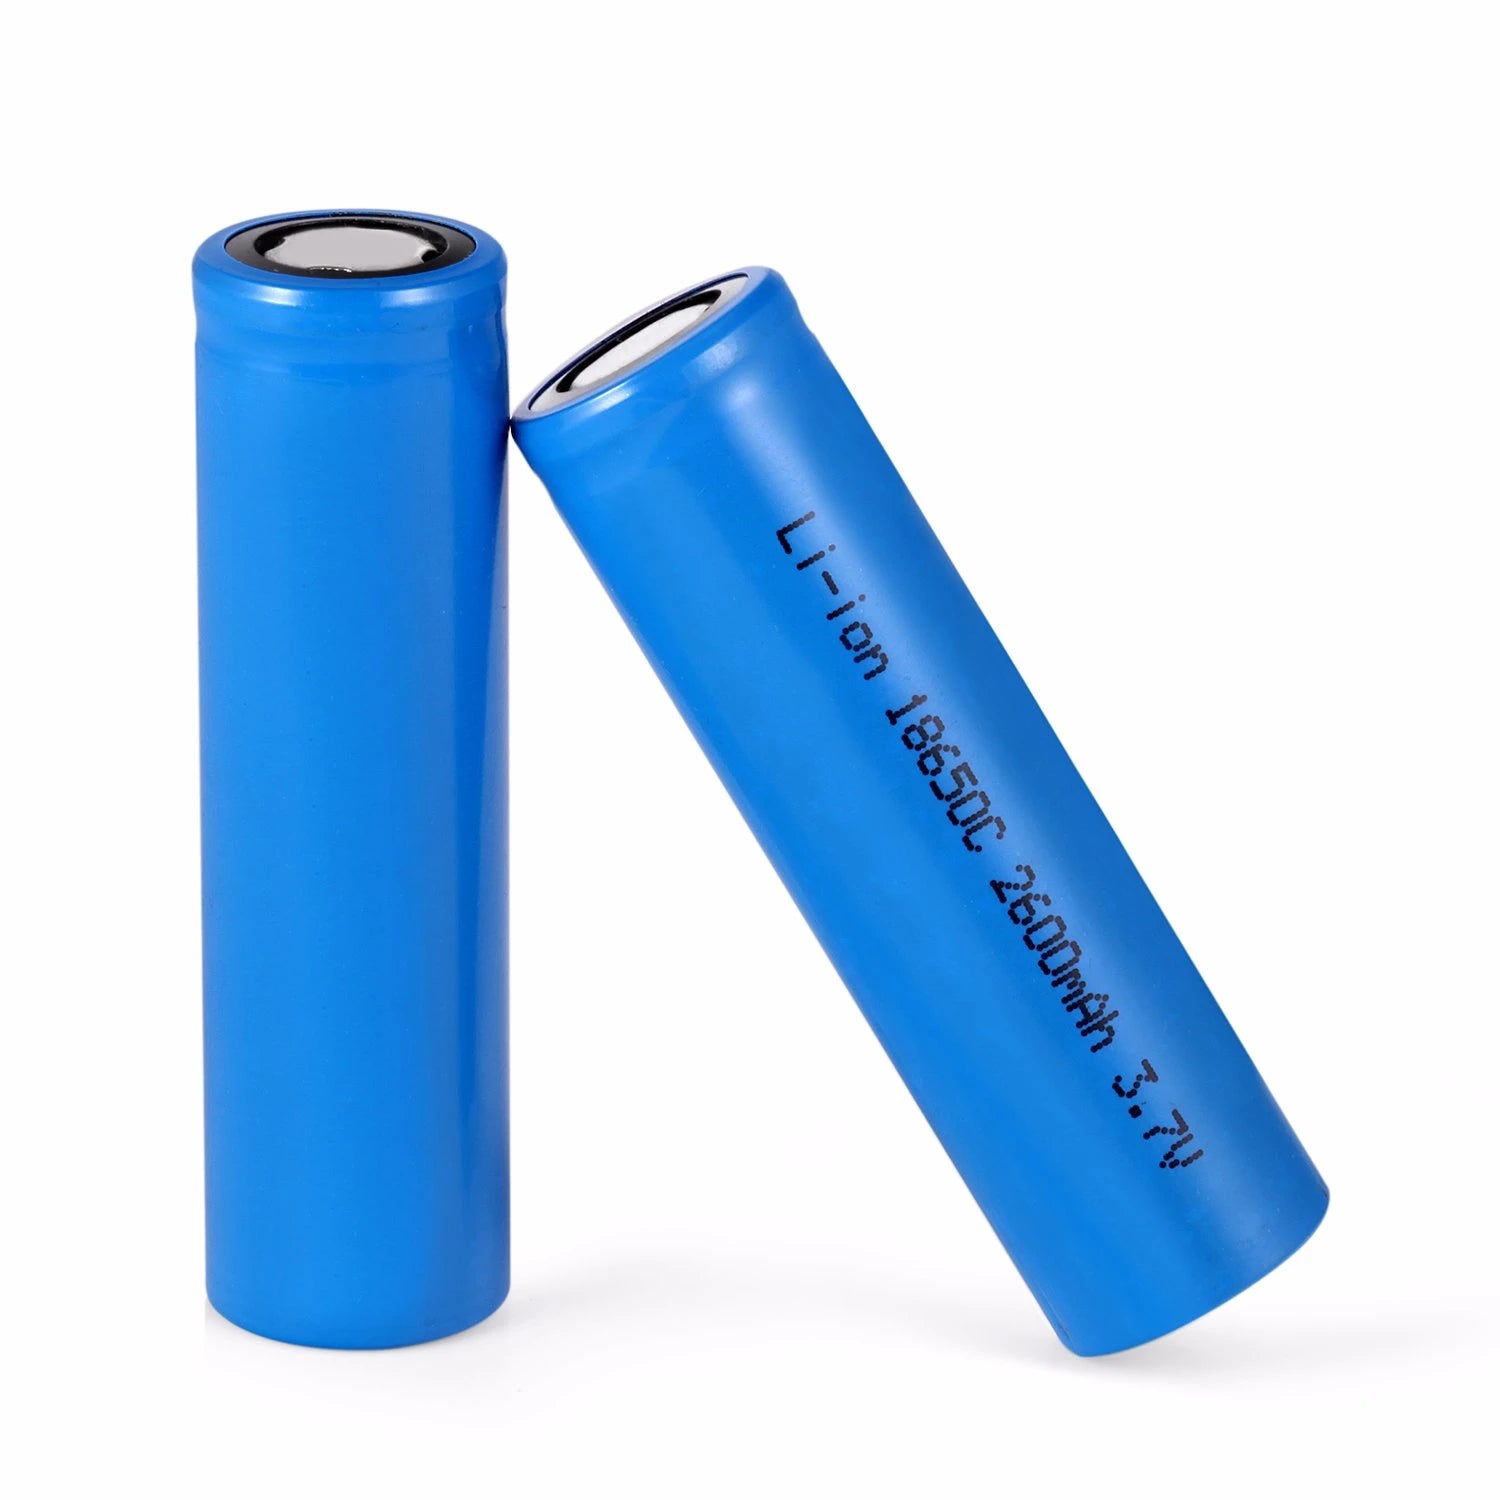 Rechargeable Li-Ion battery Icr 18650 2600mAh 3.7V - 7.4V Battery Pack